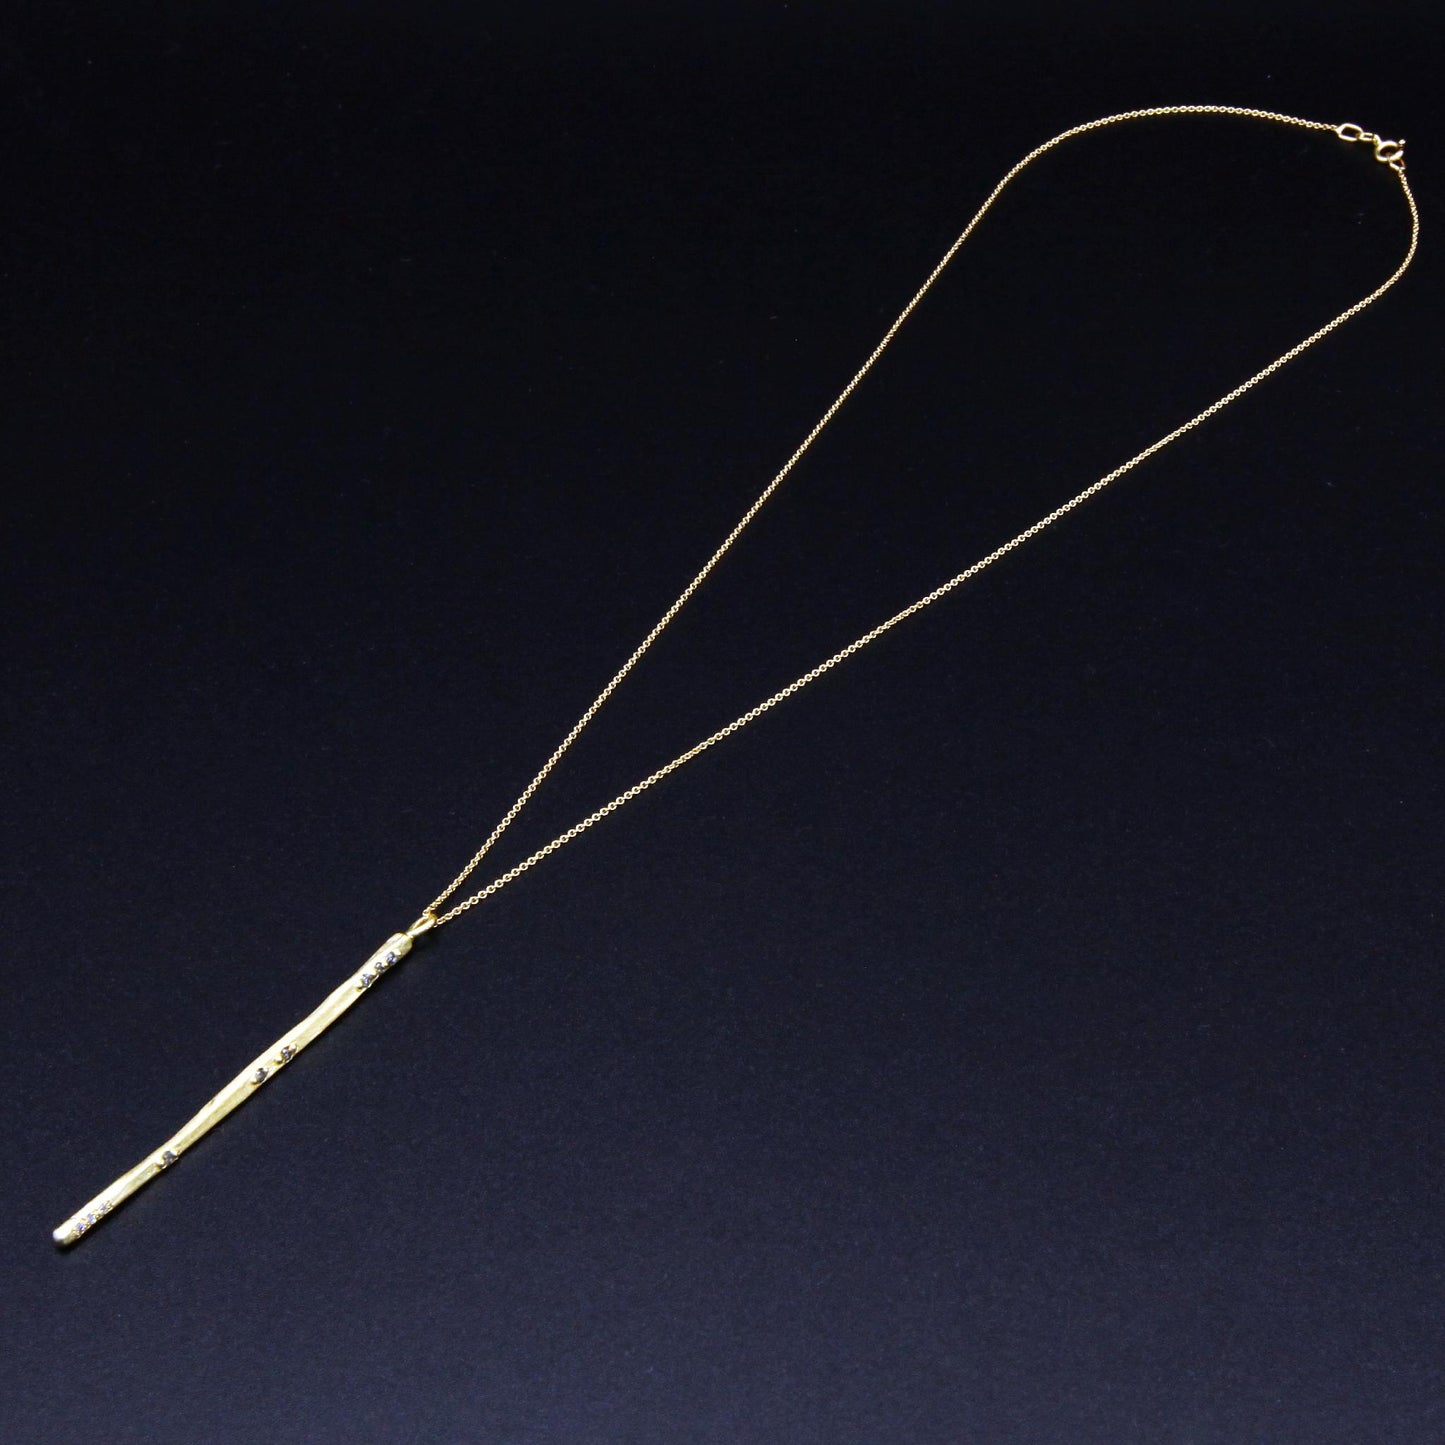 Aili Jewelry | "Sophie" Grey Diamond + 14K Gold Pendent Necklace | Firecracker